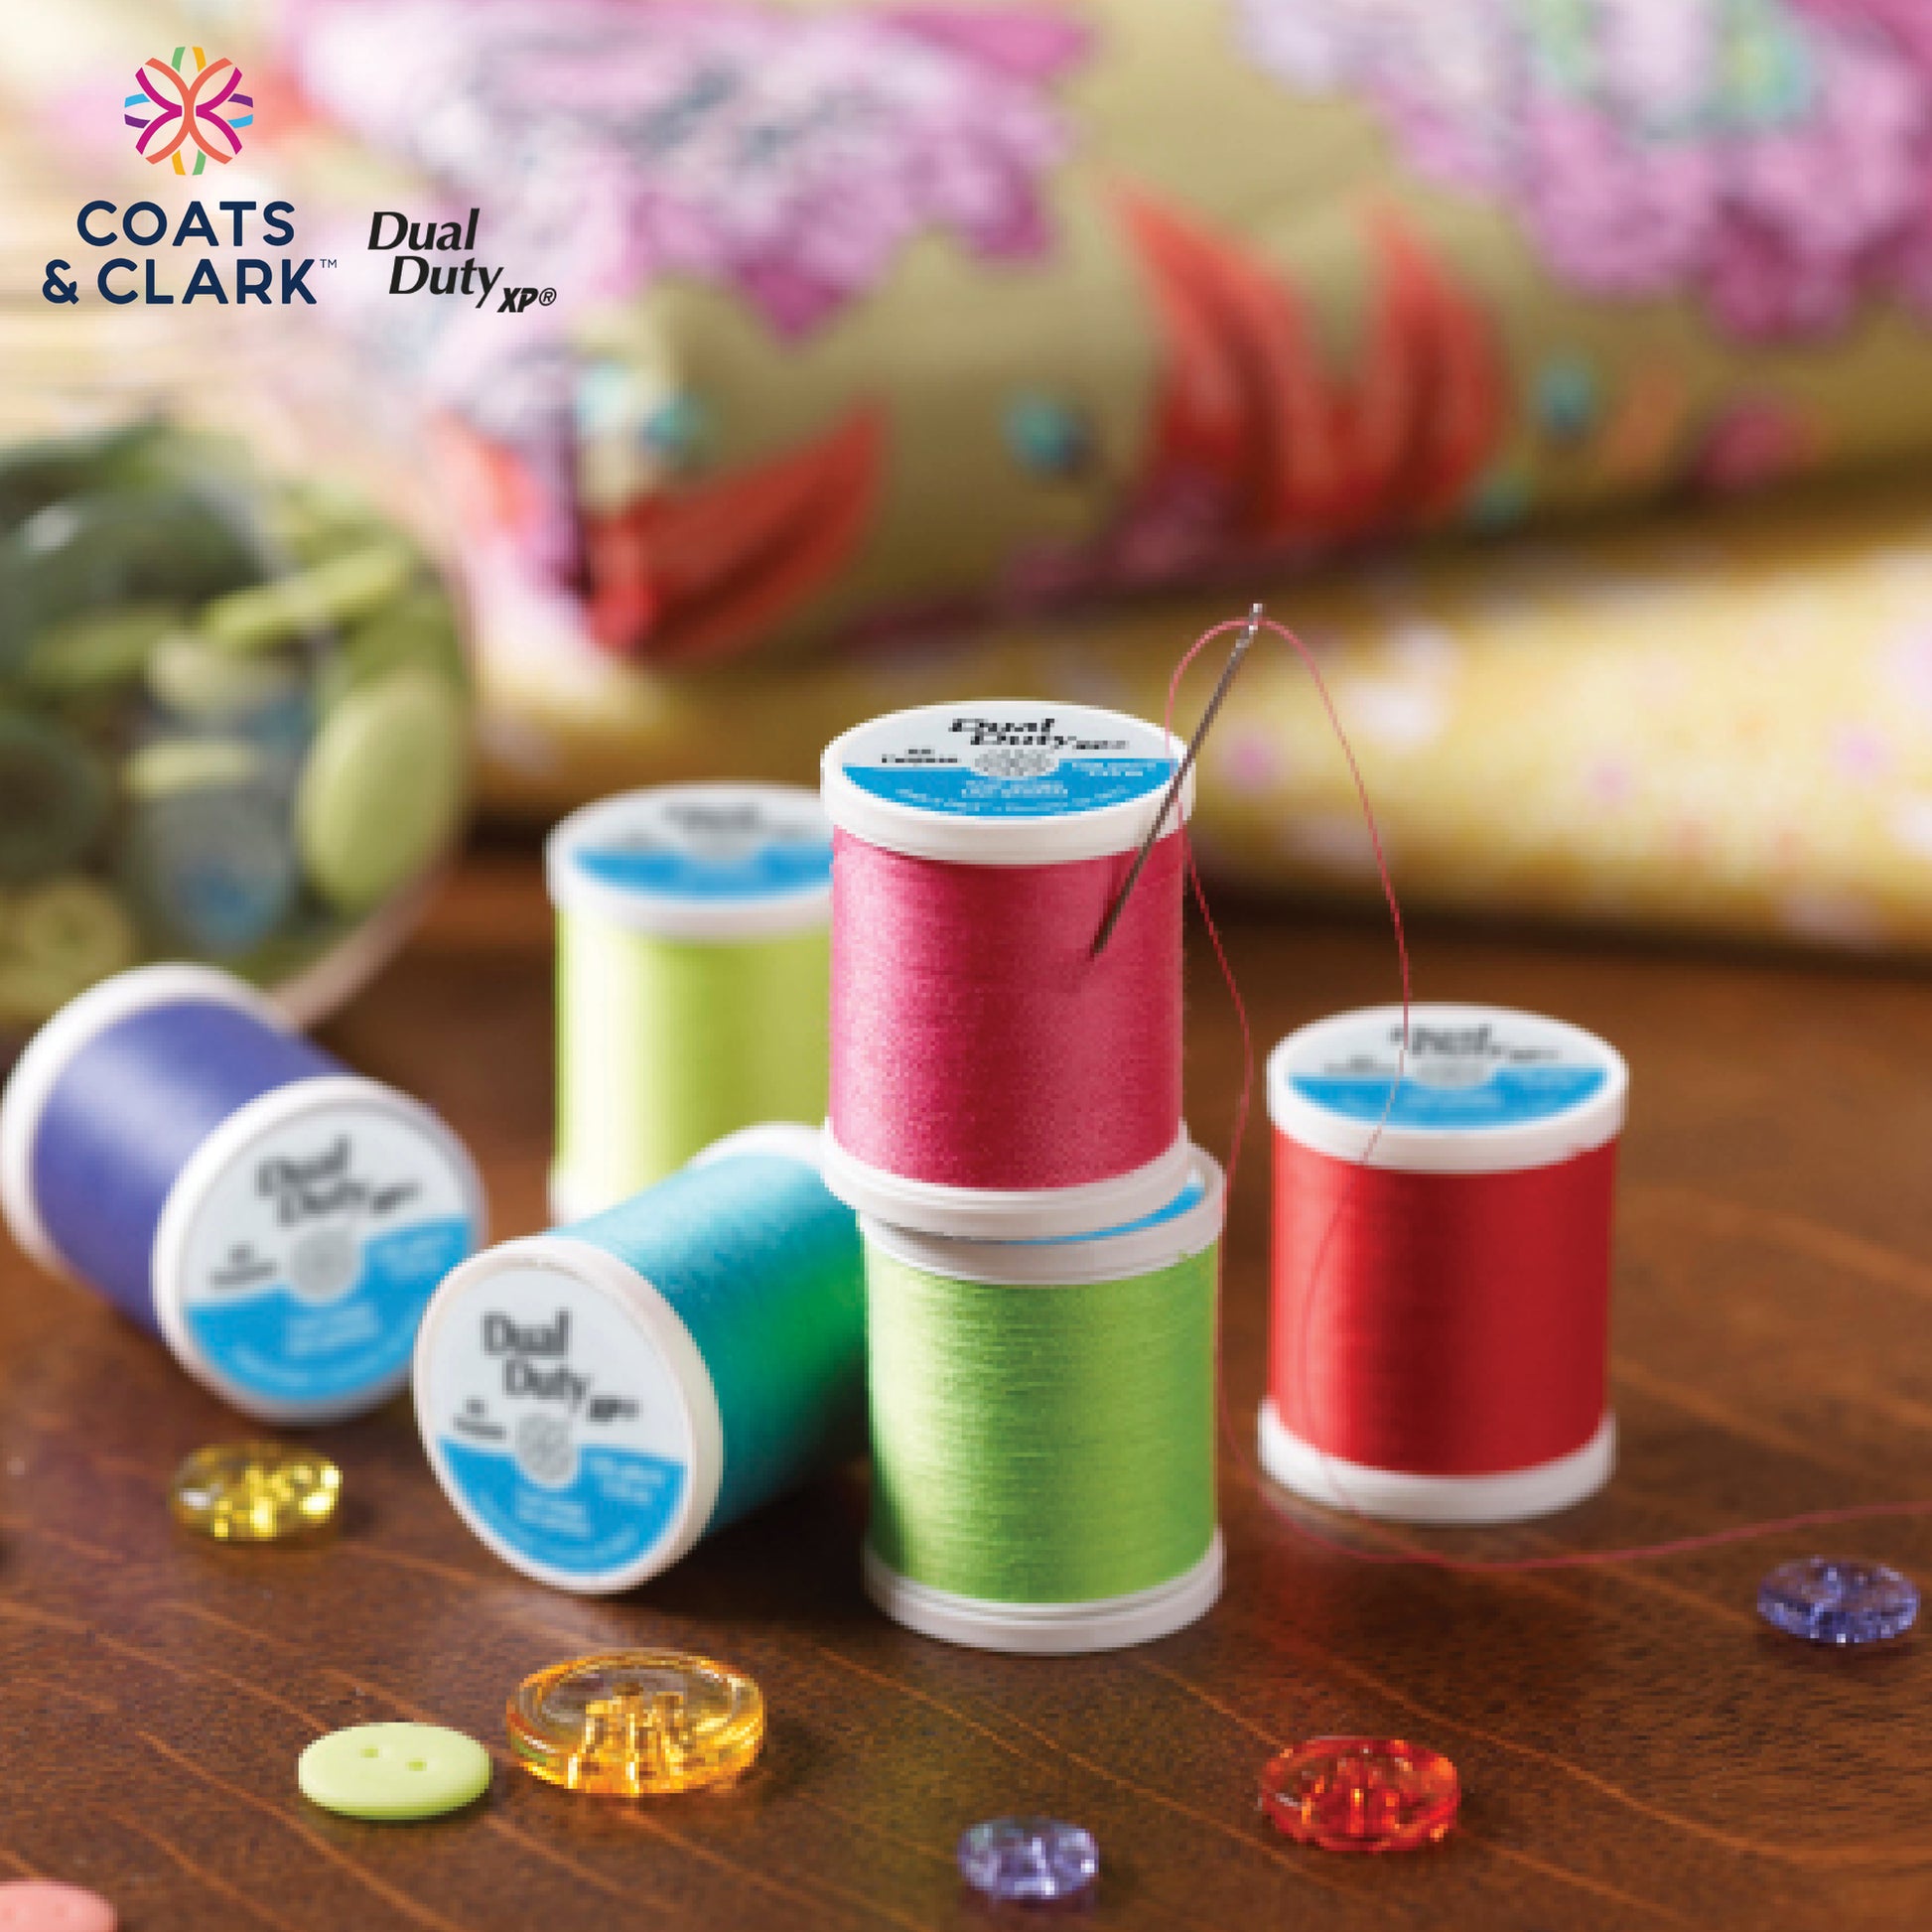 Coats & Clark Sewing Thread & Sew Happy Gift Box